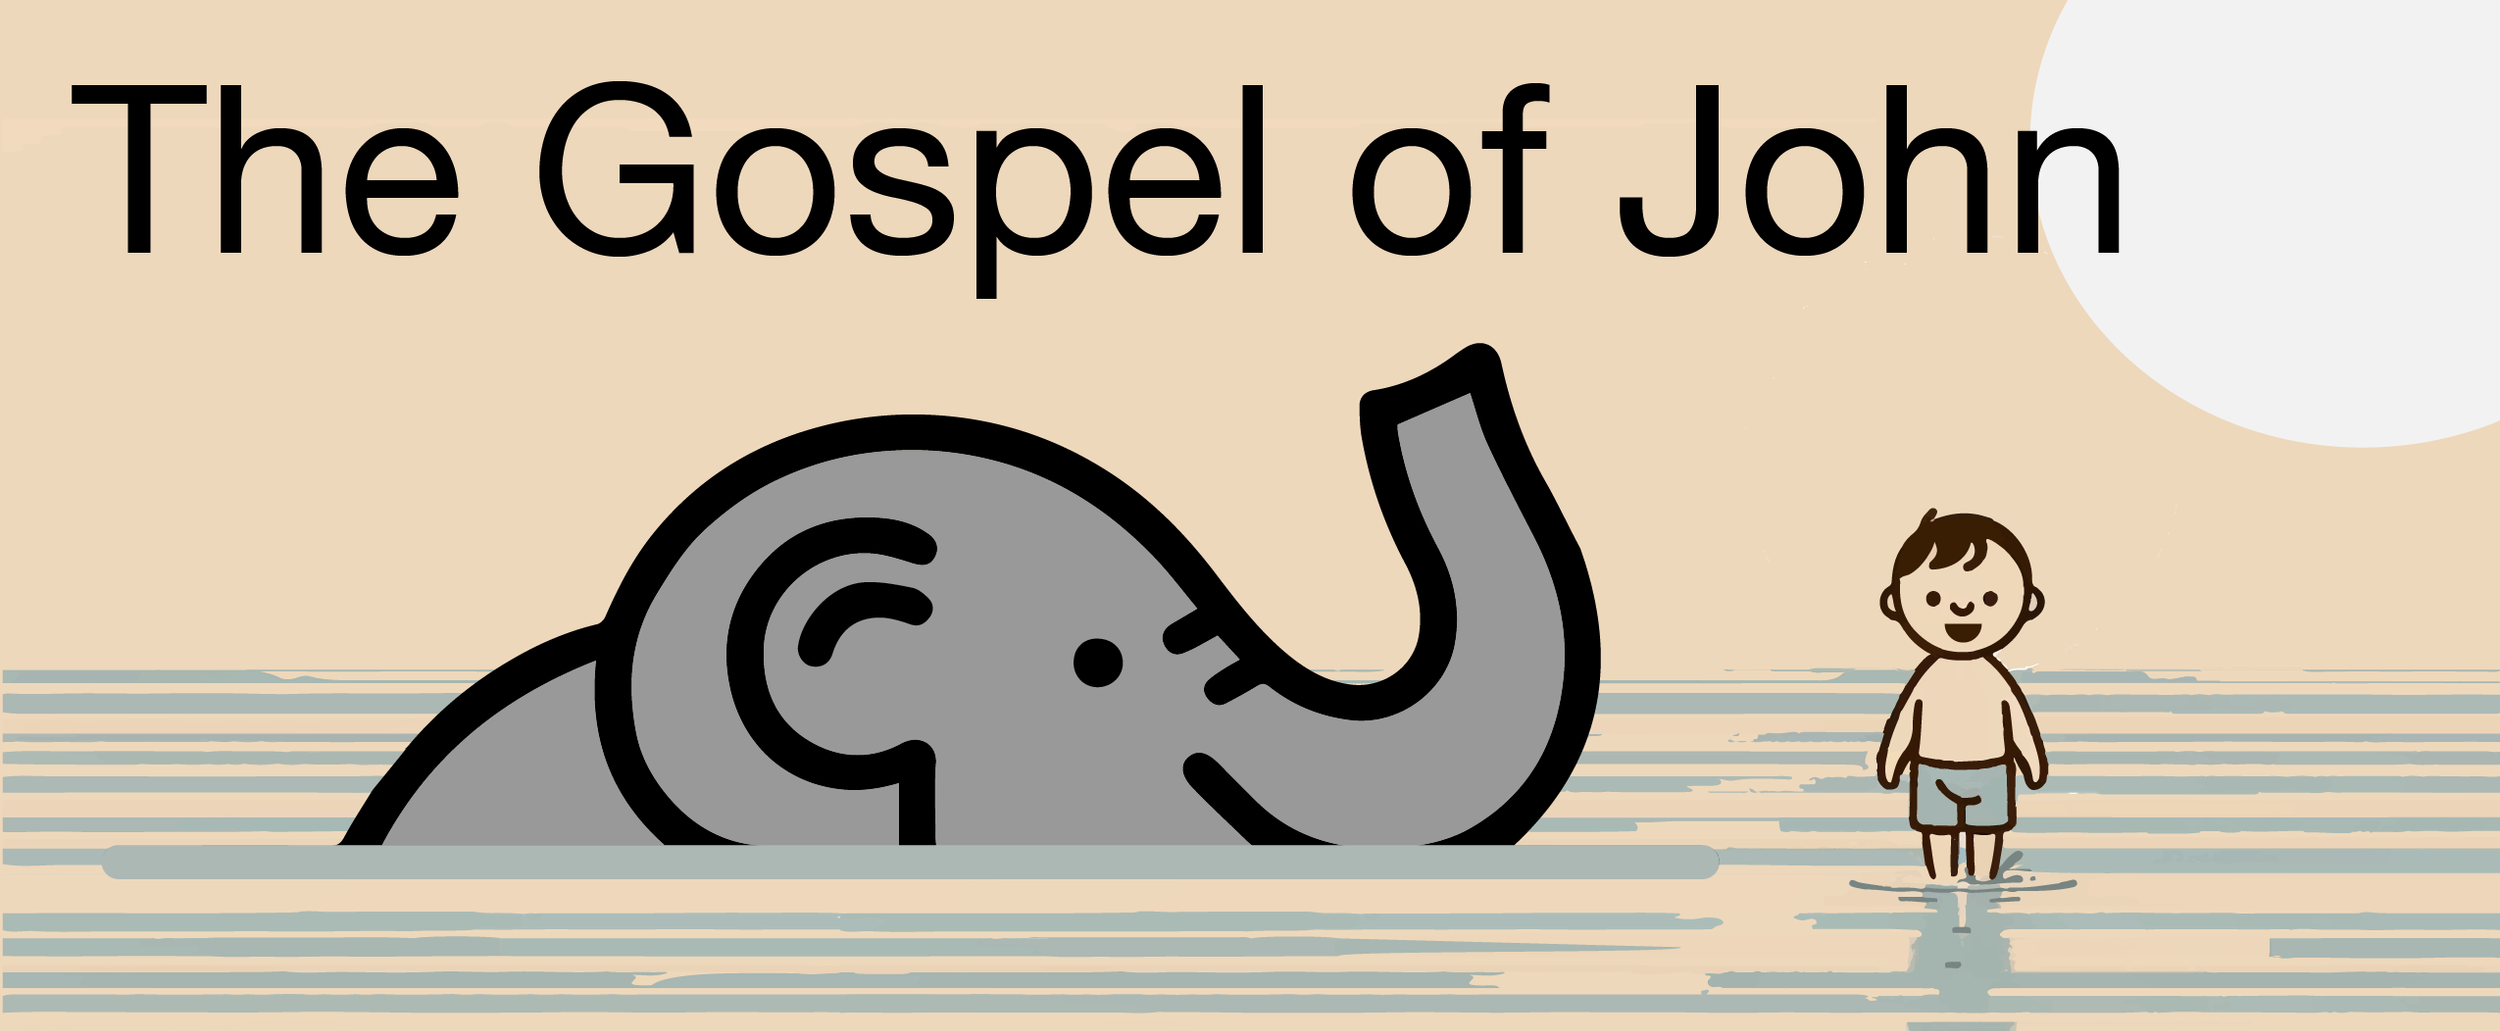 The Gospel of John.png